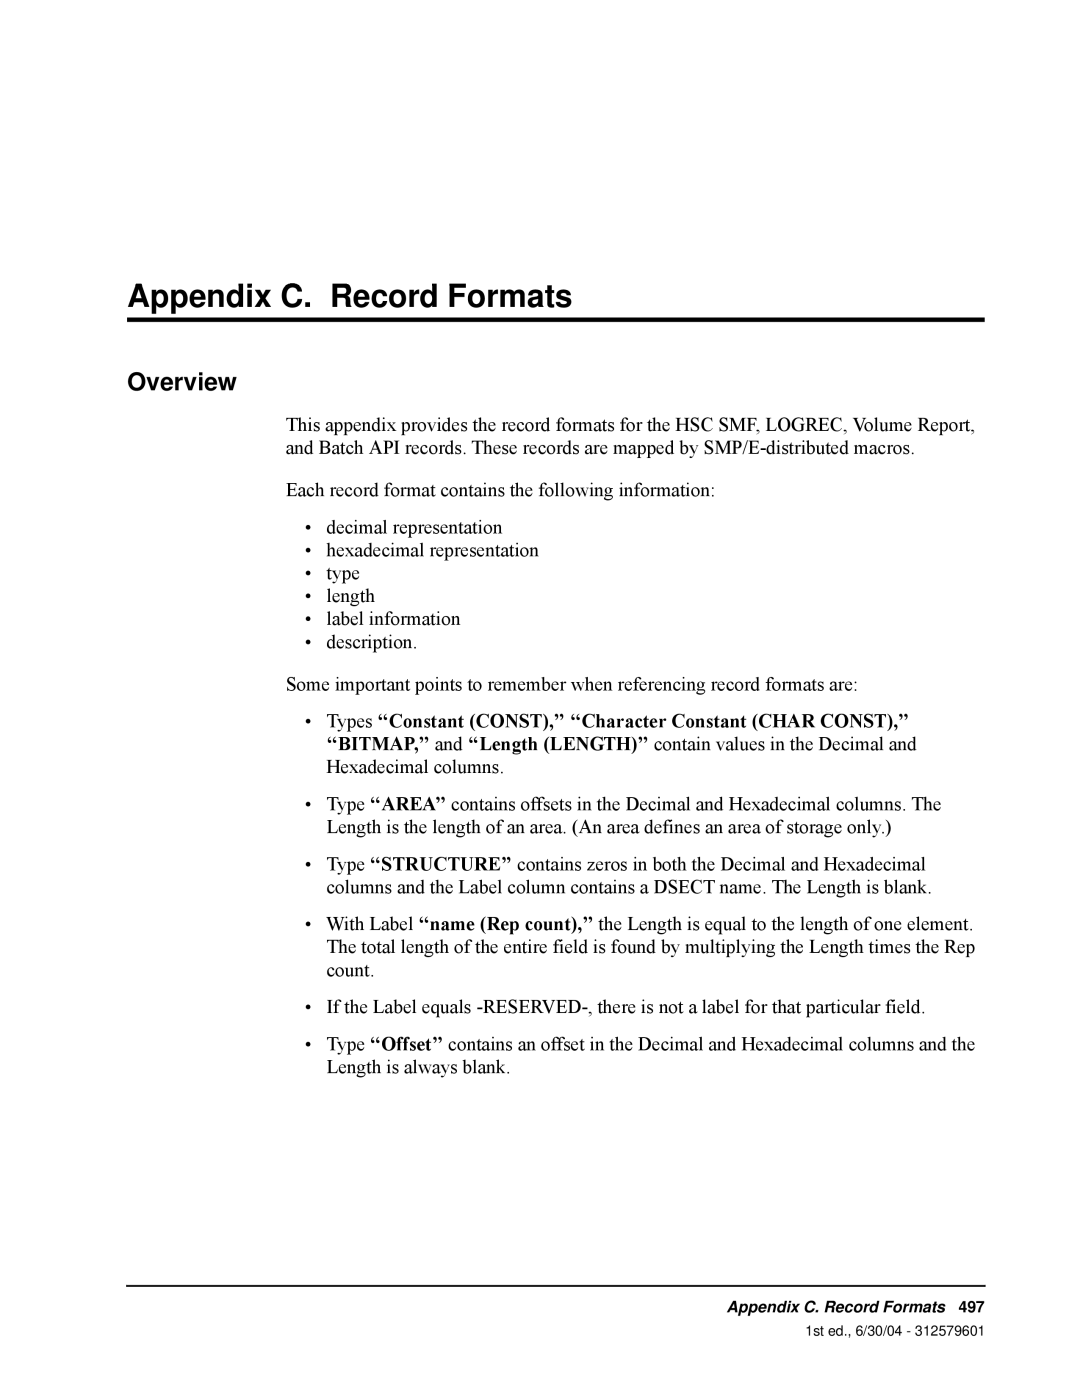 StorageTek 6 manual Appendix C. Record Formats, Overview 